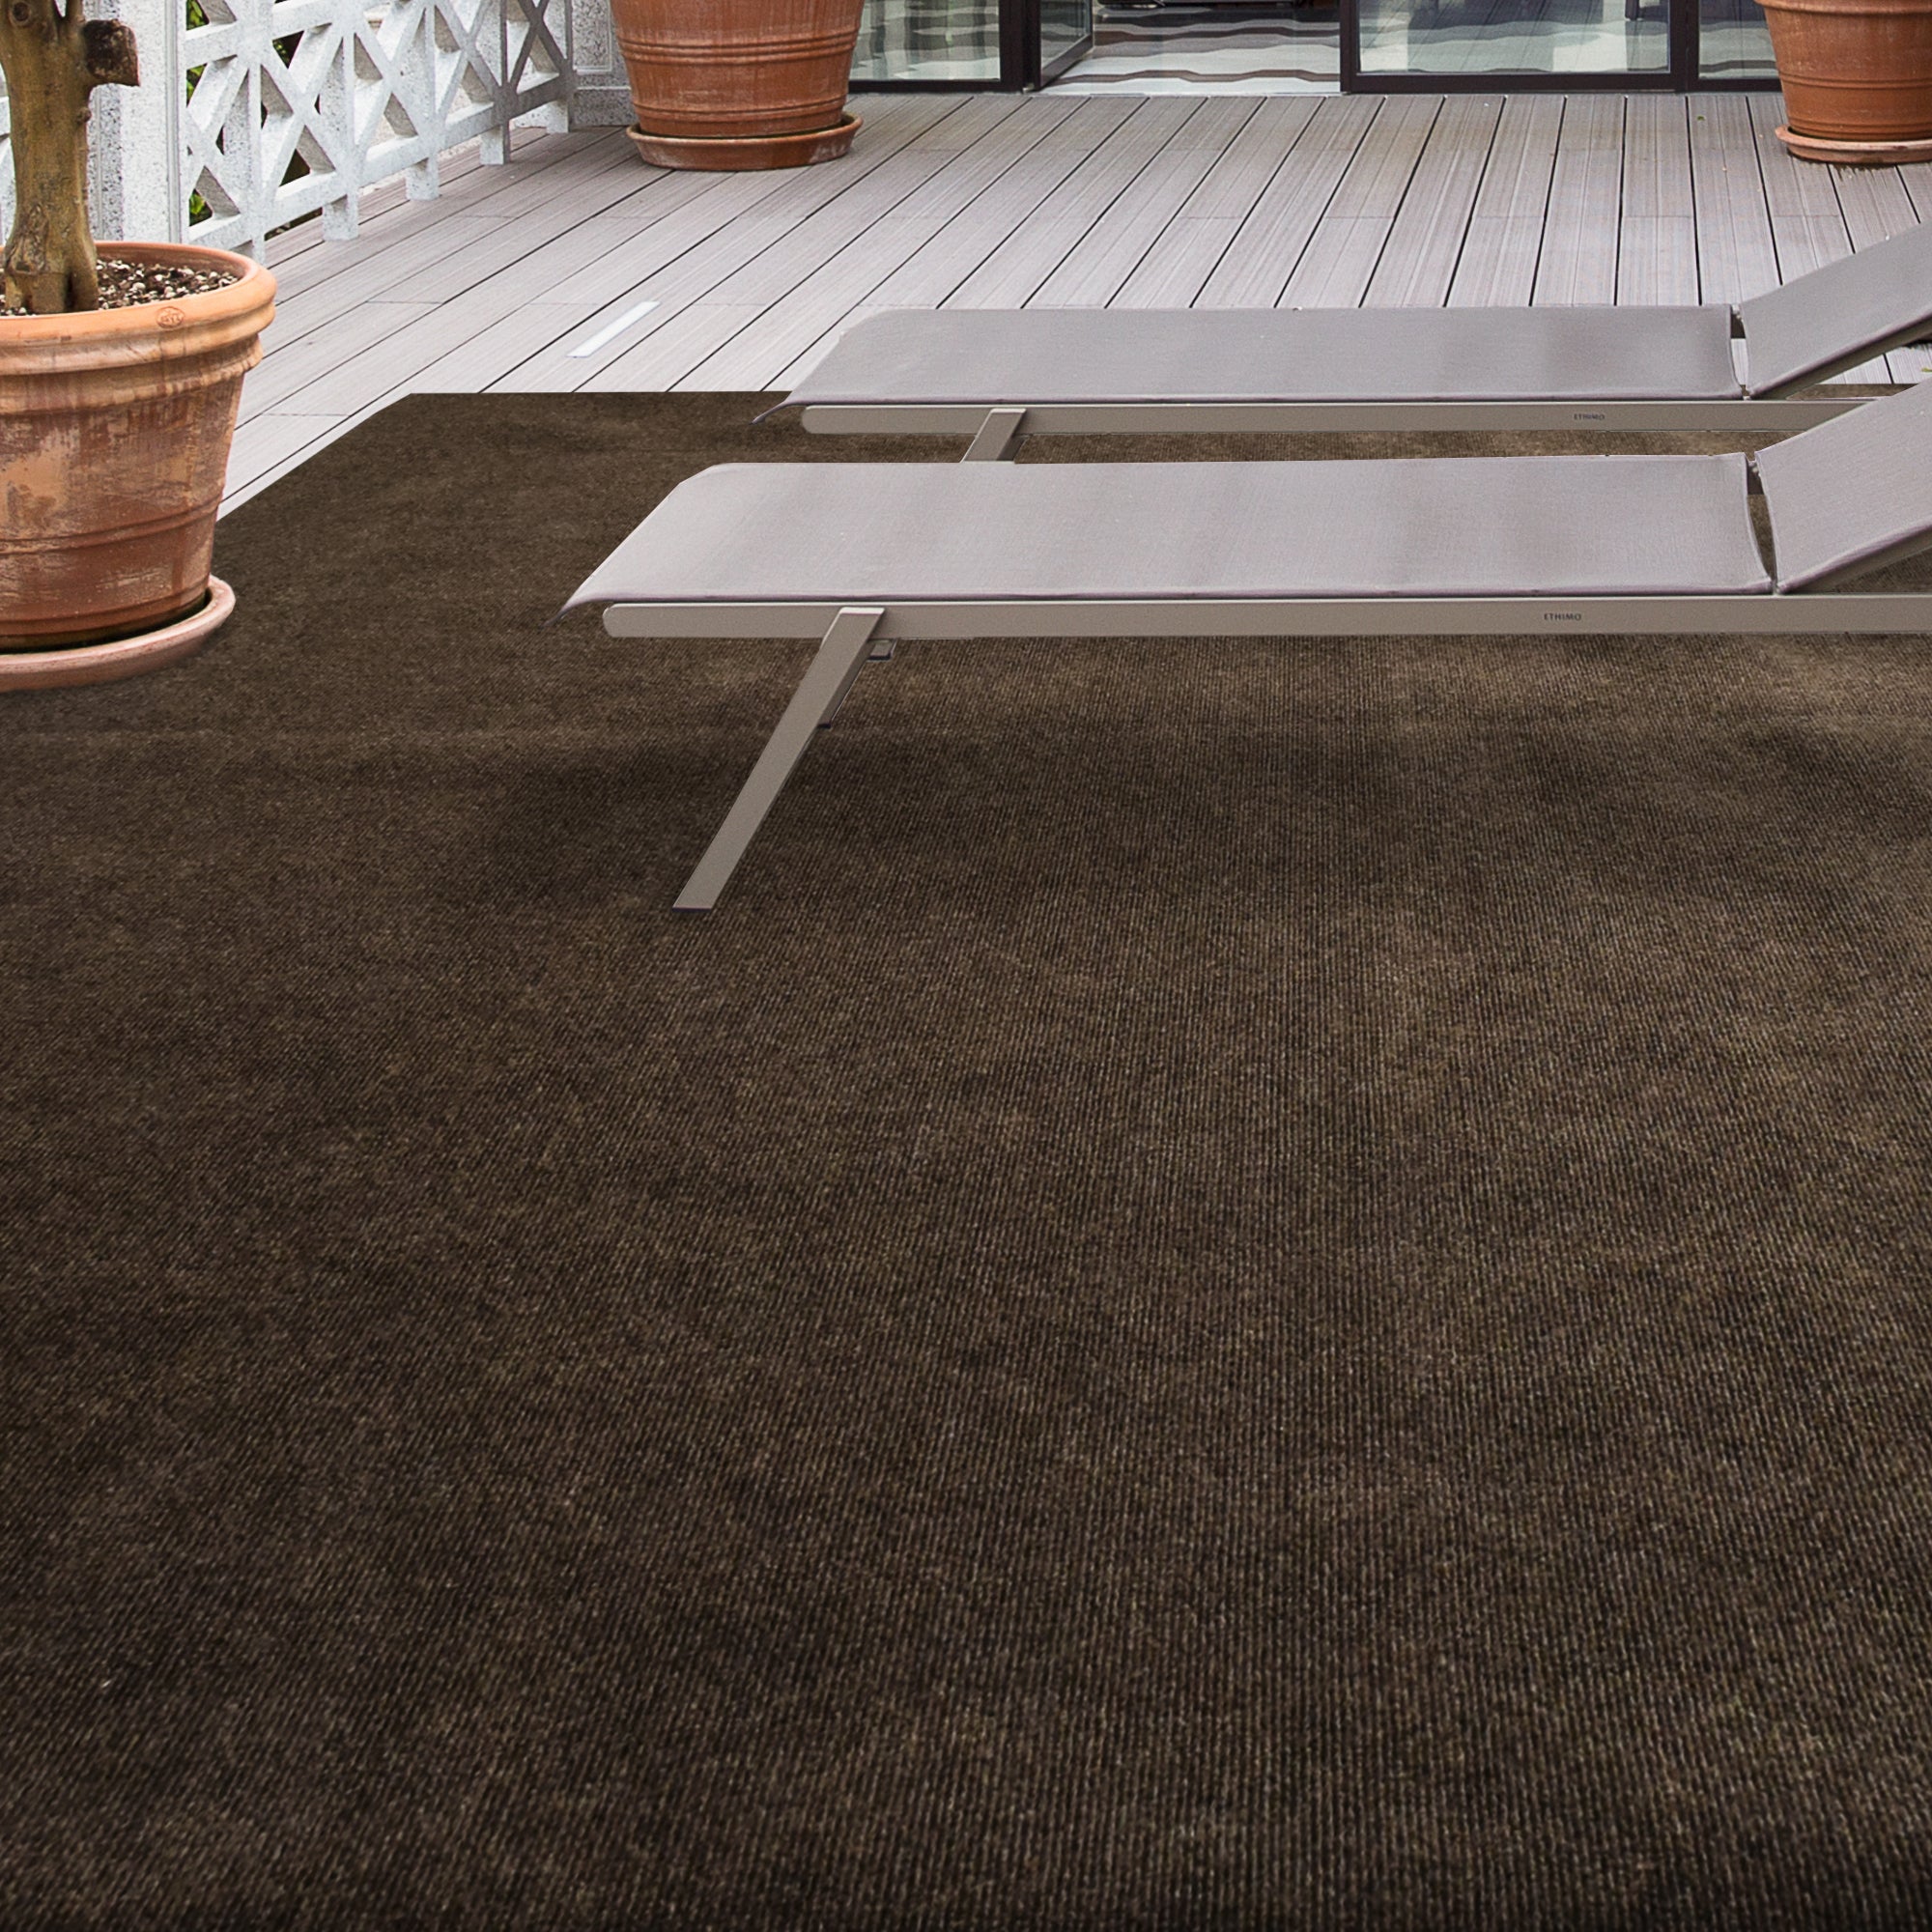 Indoor Outdoor Carpet With Marine Backing In Brown Icustomrug